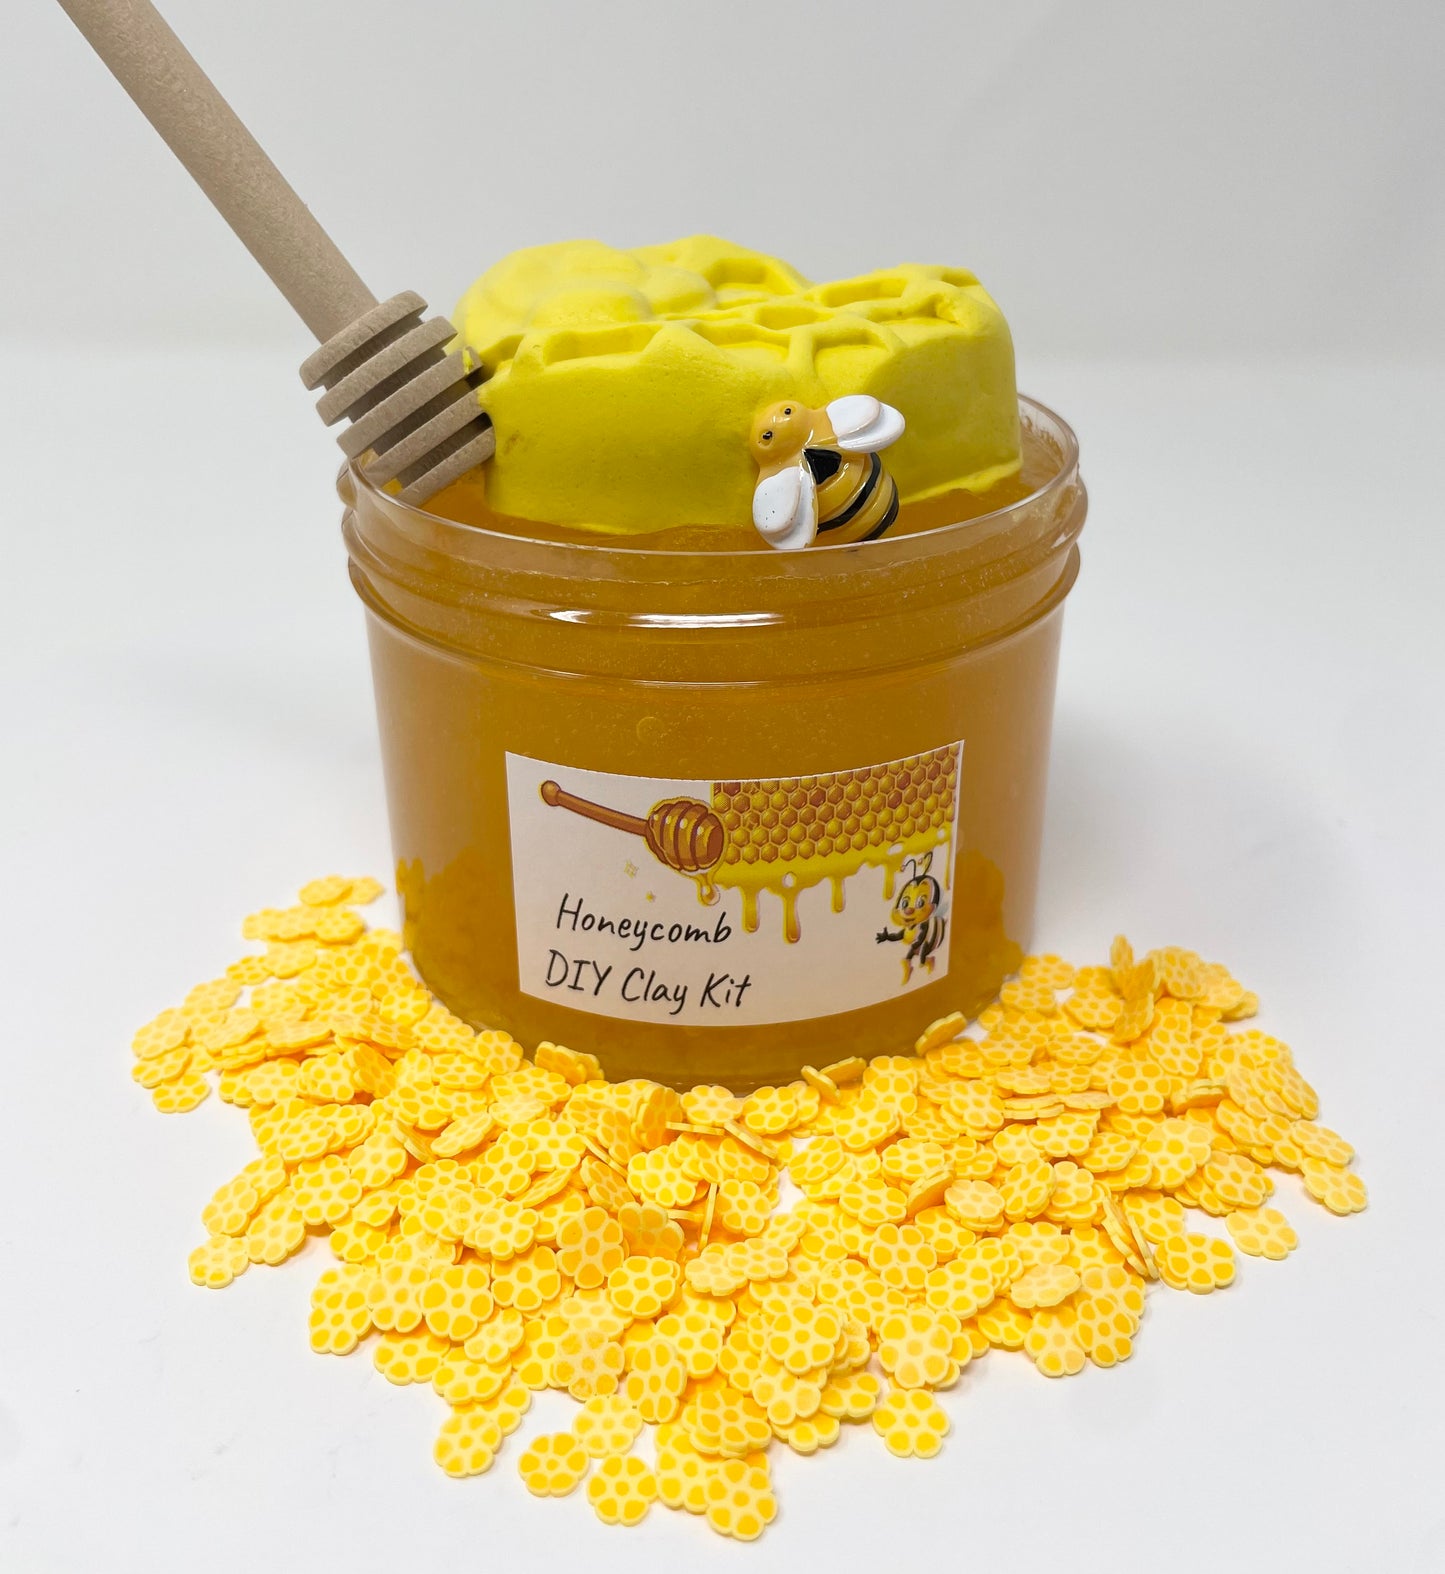 Honeycomb DIY Clay Kit